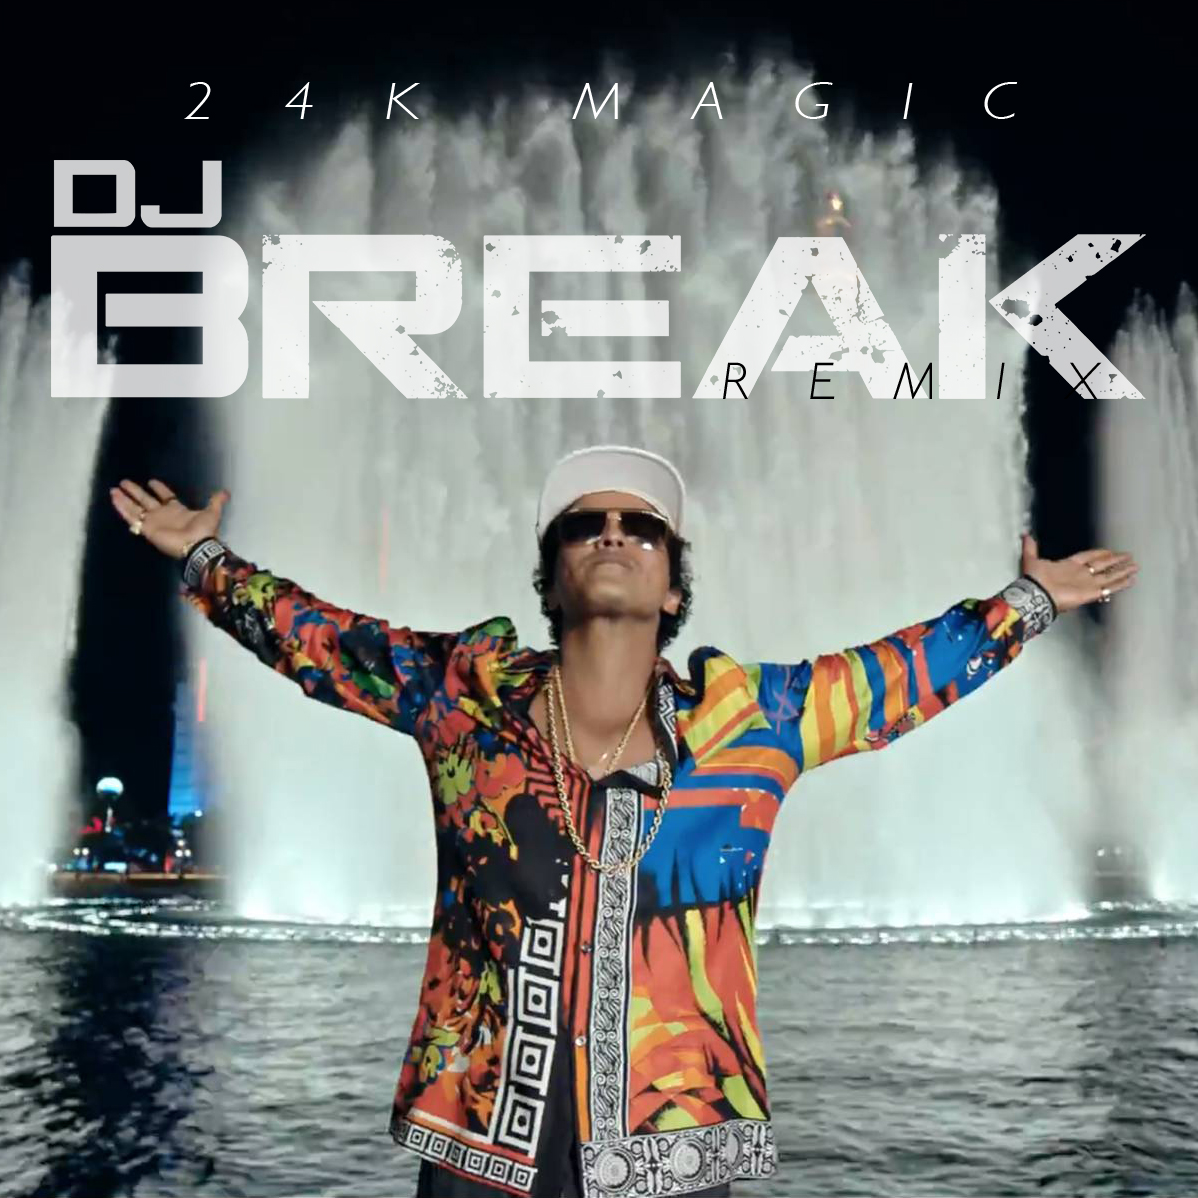 24K Magic (DJ Break Remix) COVER ART